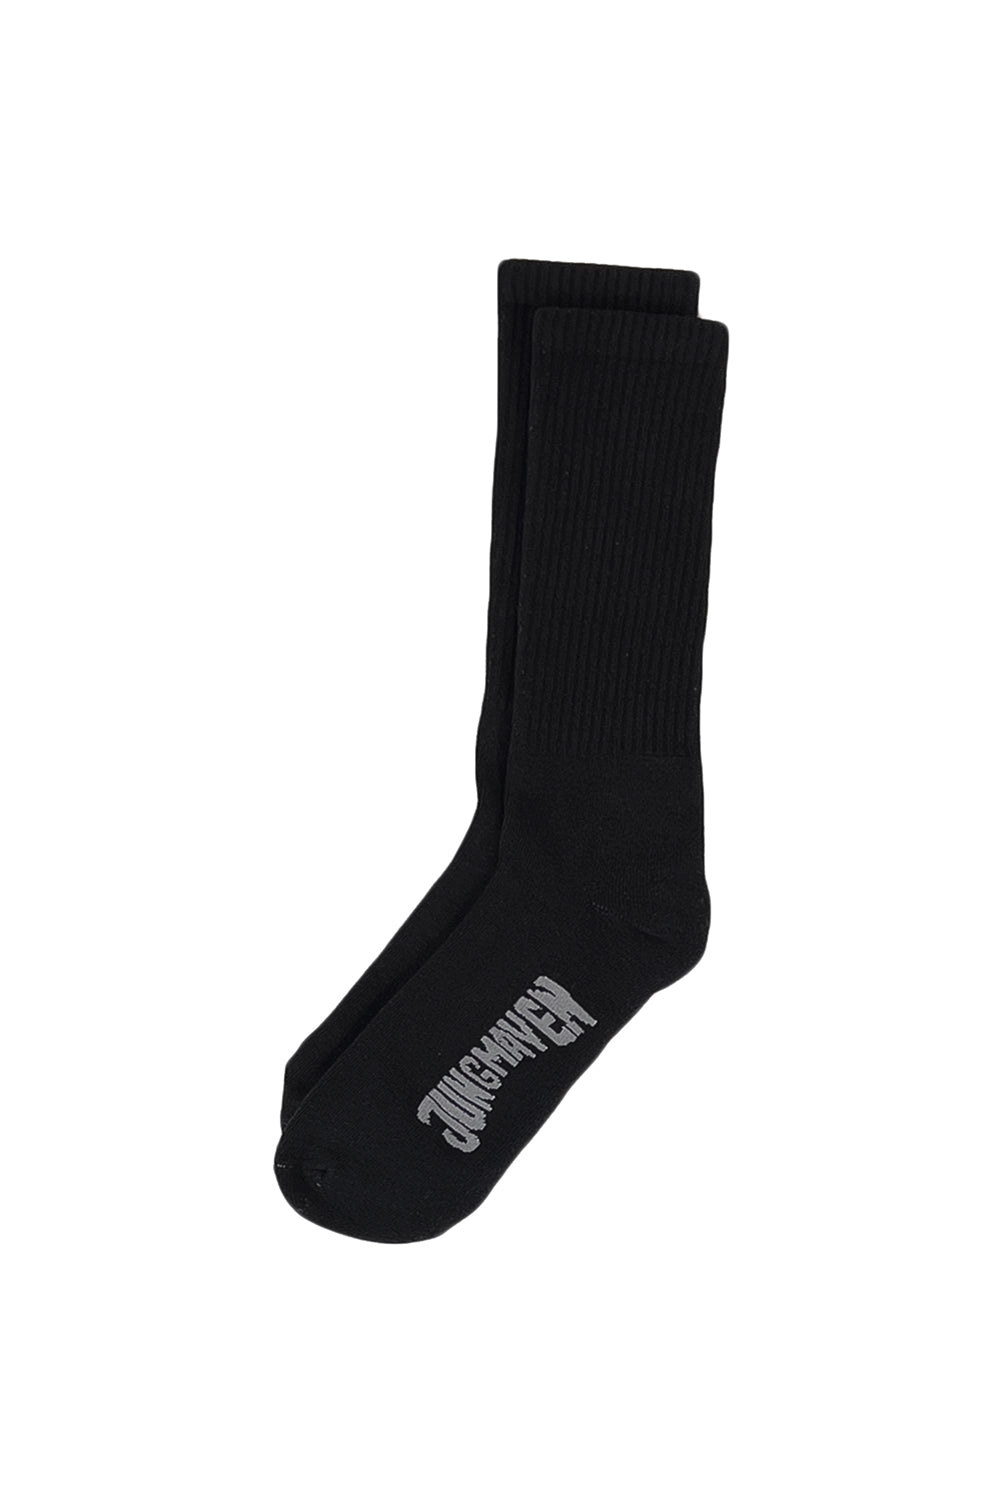 Hemp Crew Socks | Jungmaven Hemp Clothing & Accessories / Color: Black